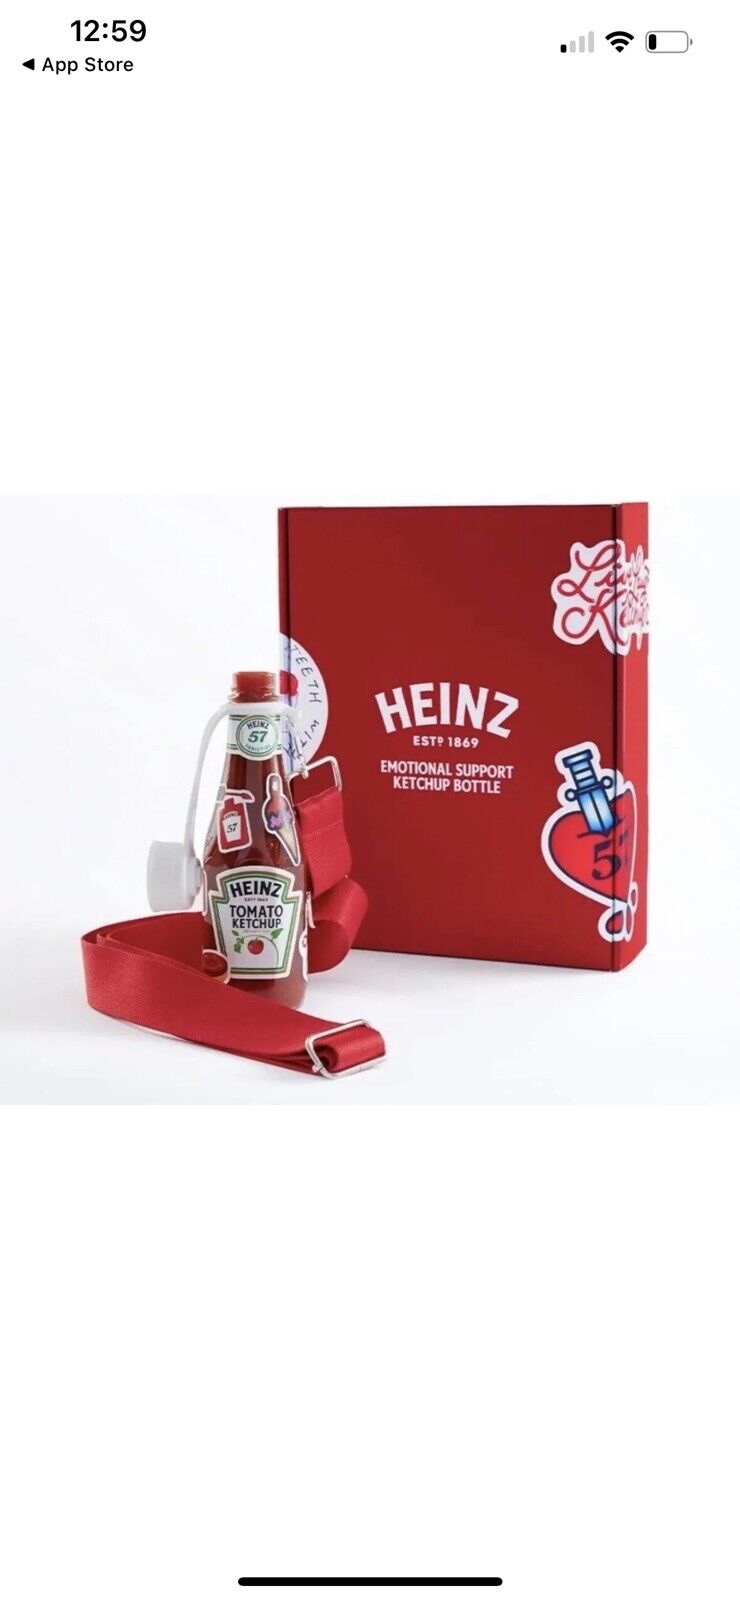 HEINZ Emotional Support Ketchup Bottle